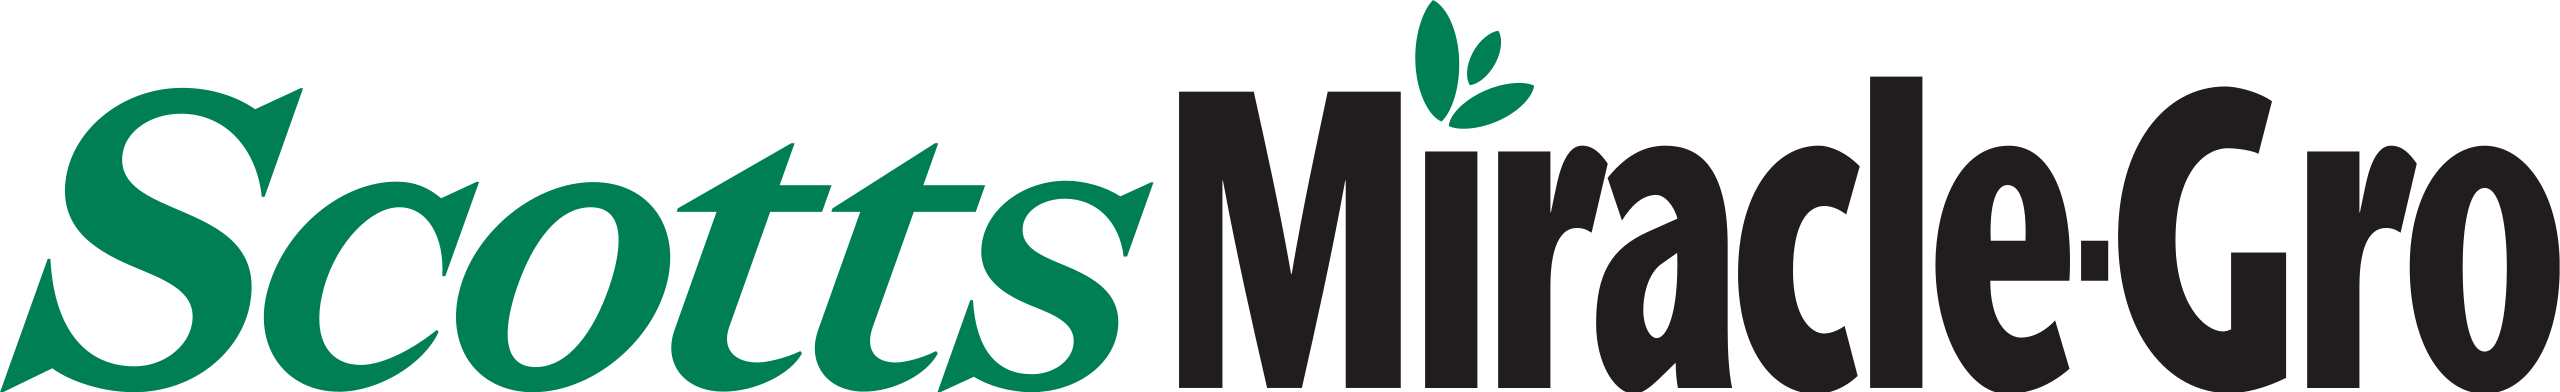 Scotts_Miracle-Gro_logo.svg (1)